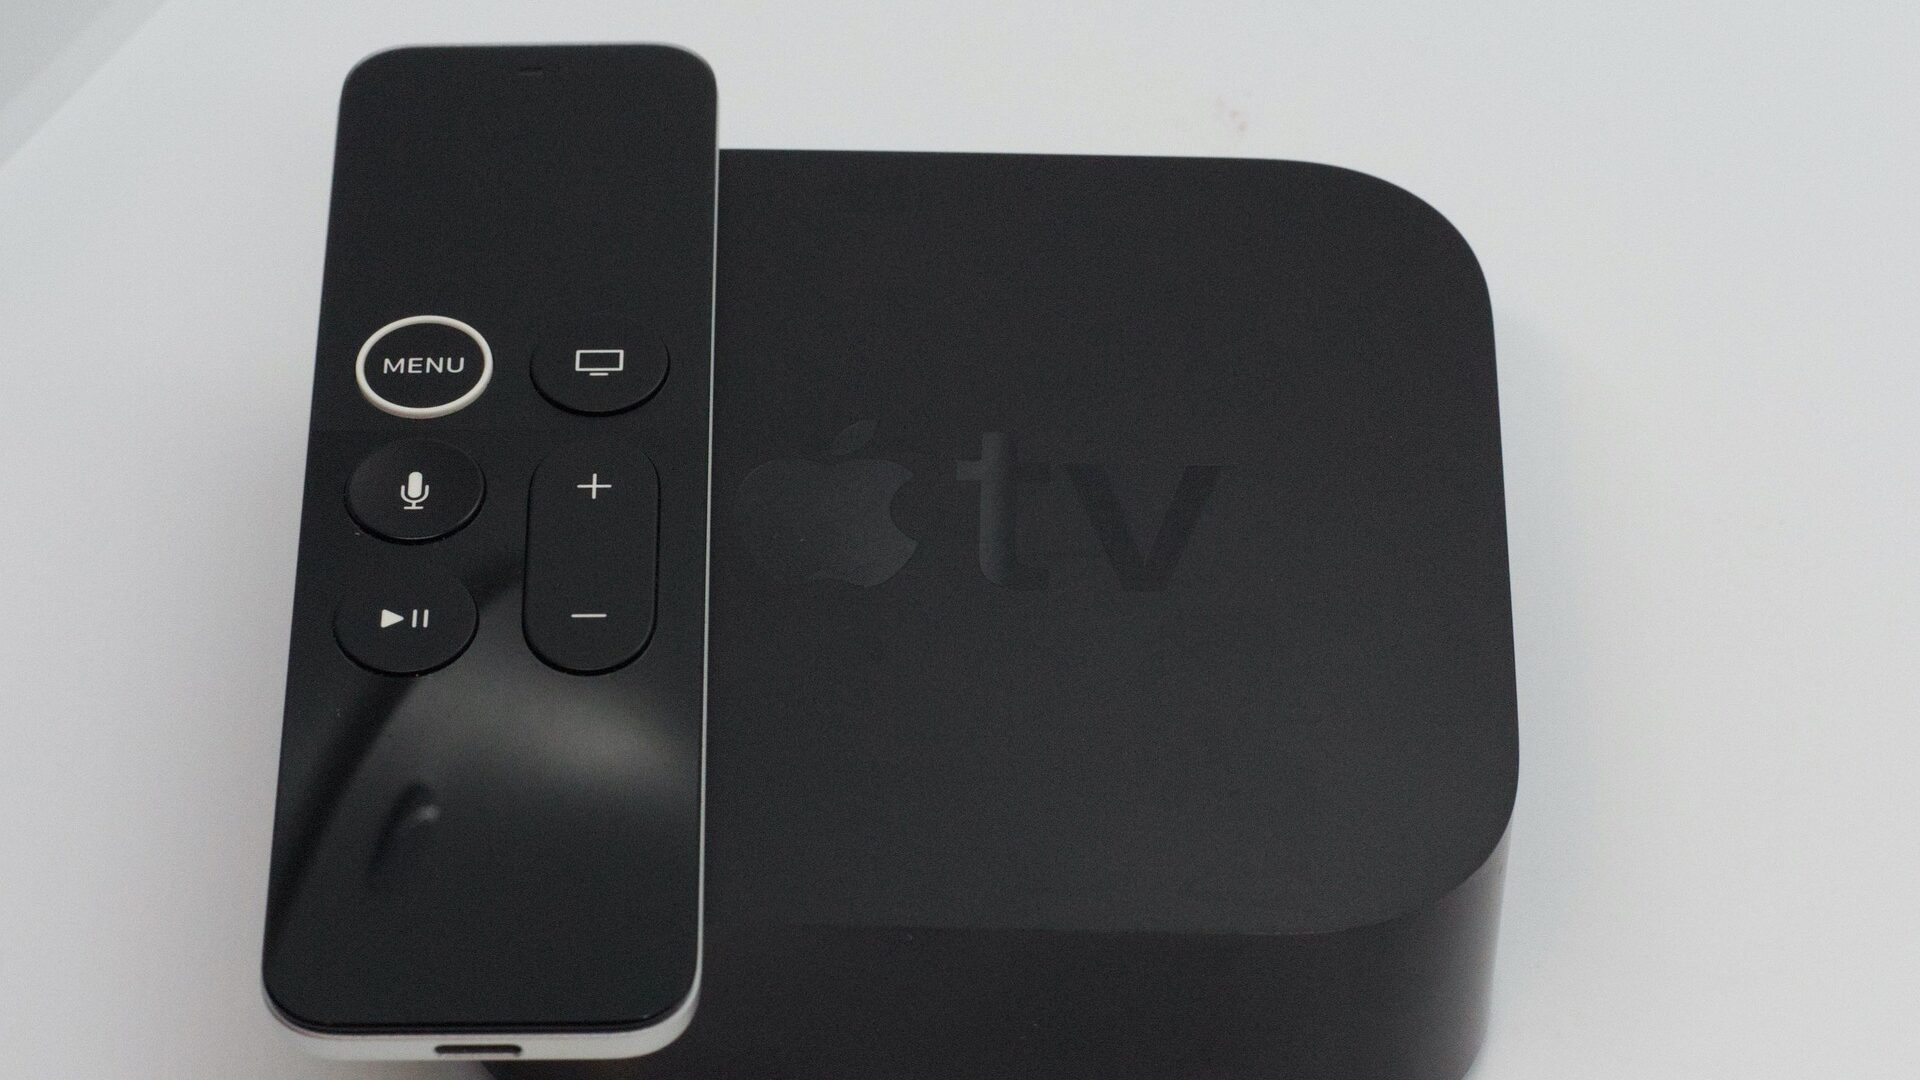 zu den besten Chromecast-Alternativen gehört Apple TV